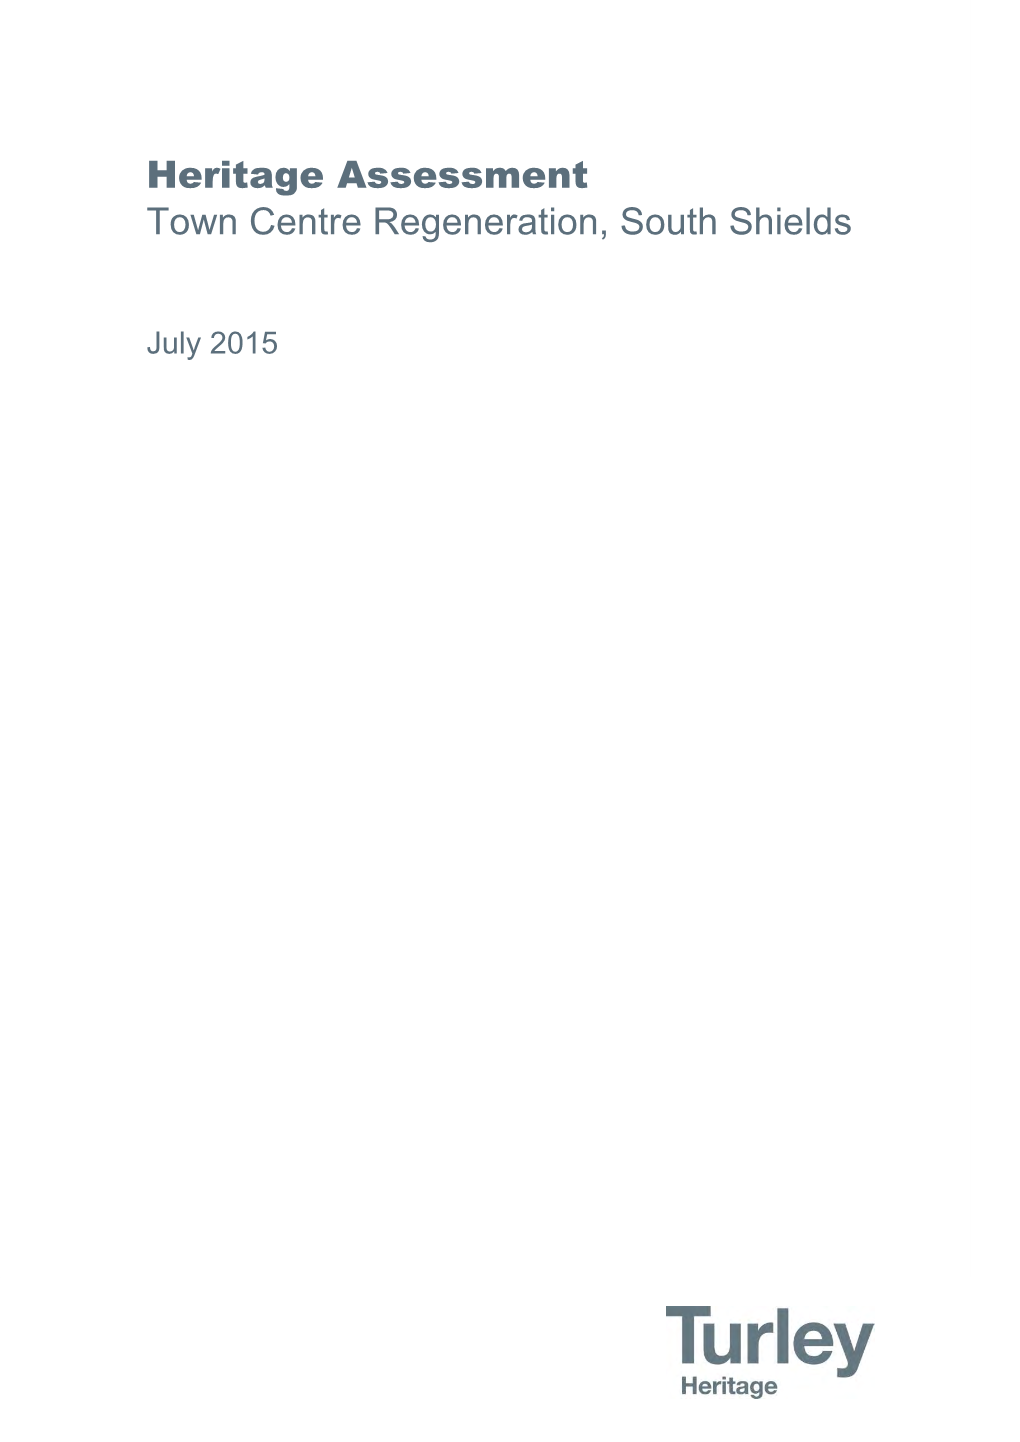 Heritage Assessment Town Centre Regeneration, South Shields